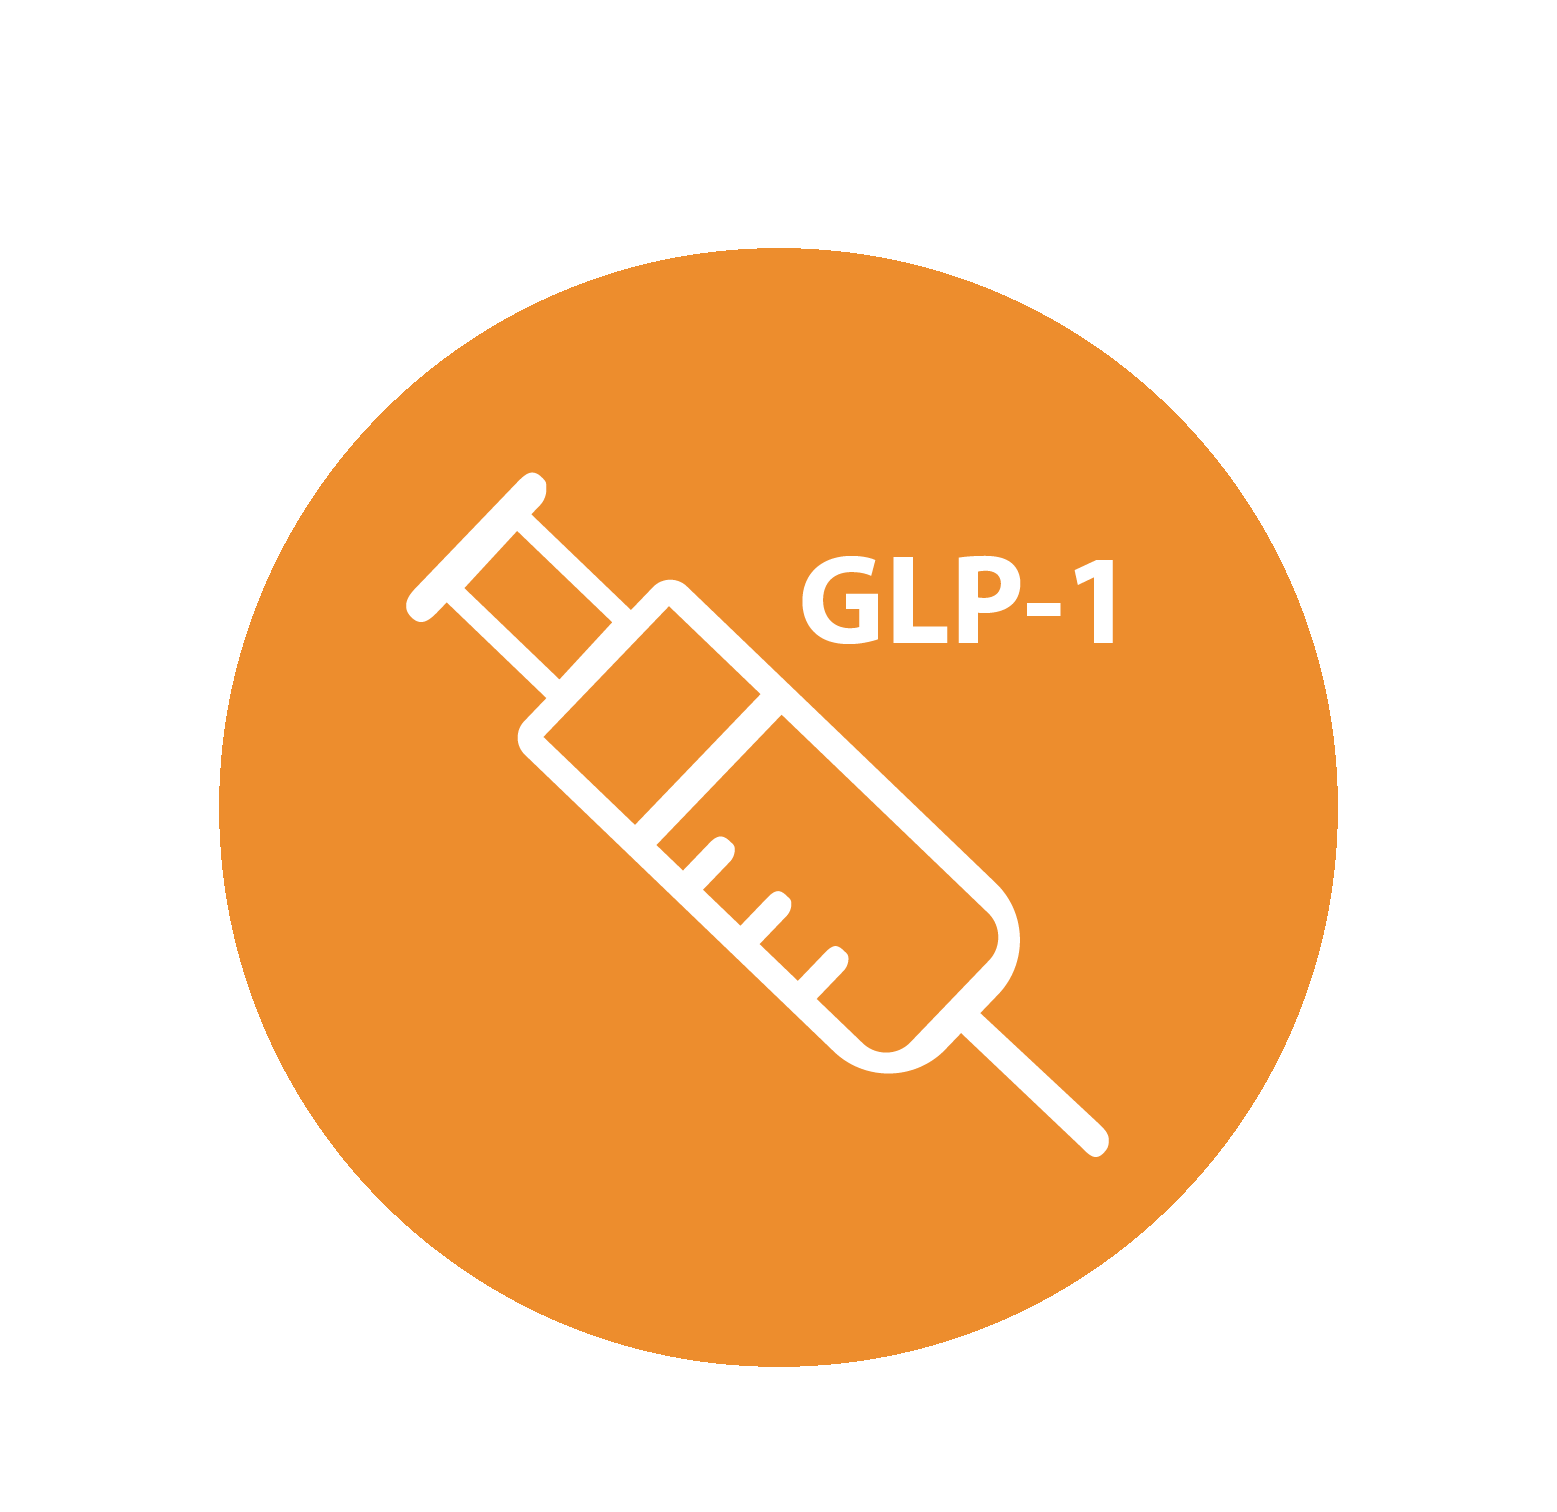 Glp-1 Receptor Agonists